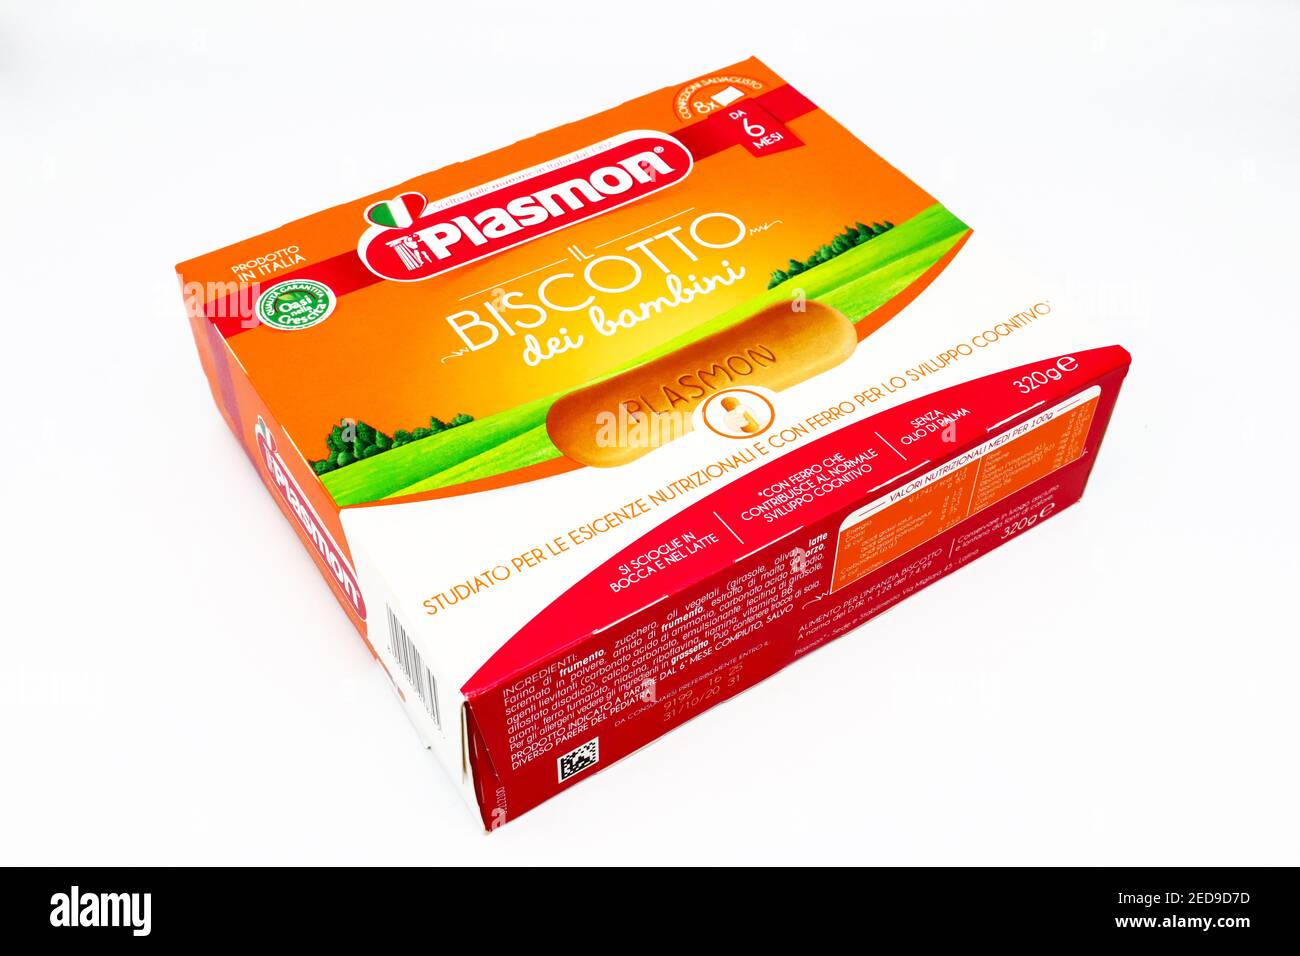 PLASMON Baby Biscuits. Plasmon is an Italian brand of Baby Food products of  Kraft Heinz Co. Group Stock Photo - Alamy